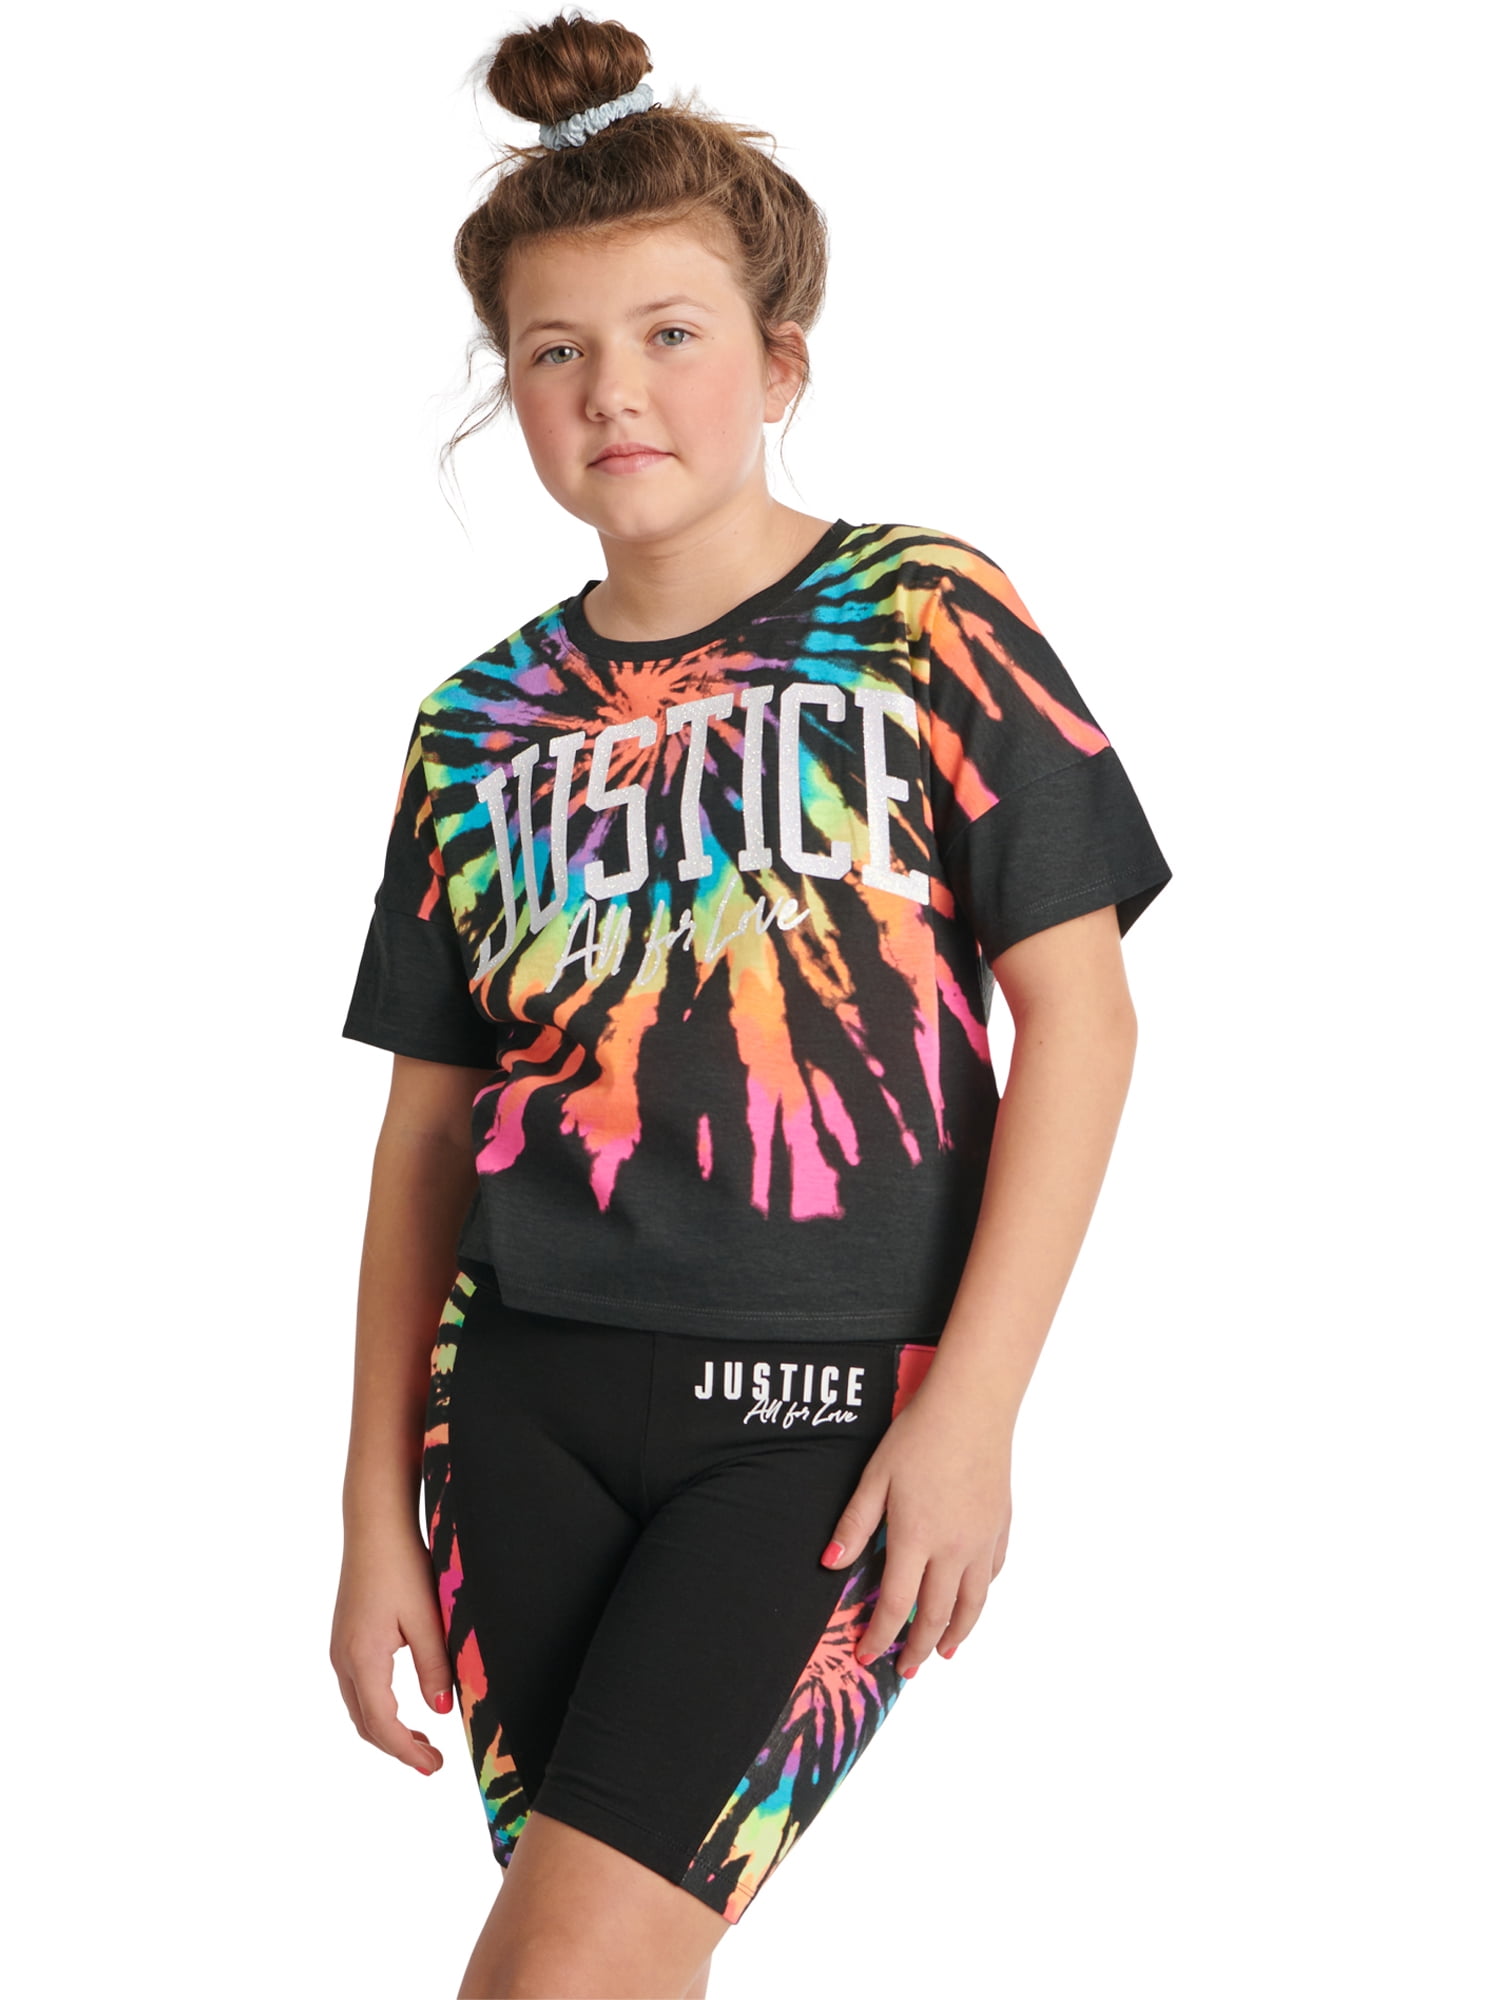 Justice Girls Boxy Oversized T-Shirt & Bike Short Outfit Set, Sizes XS-XXL  